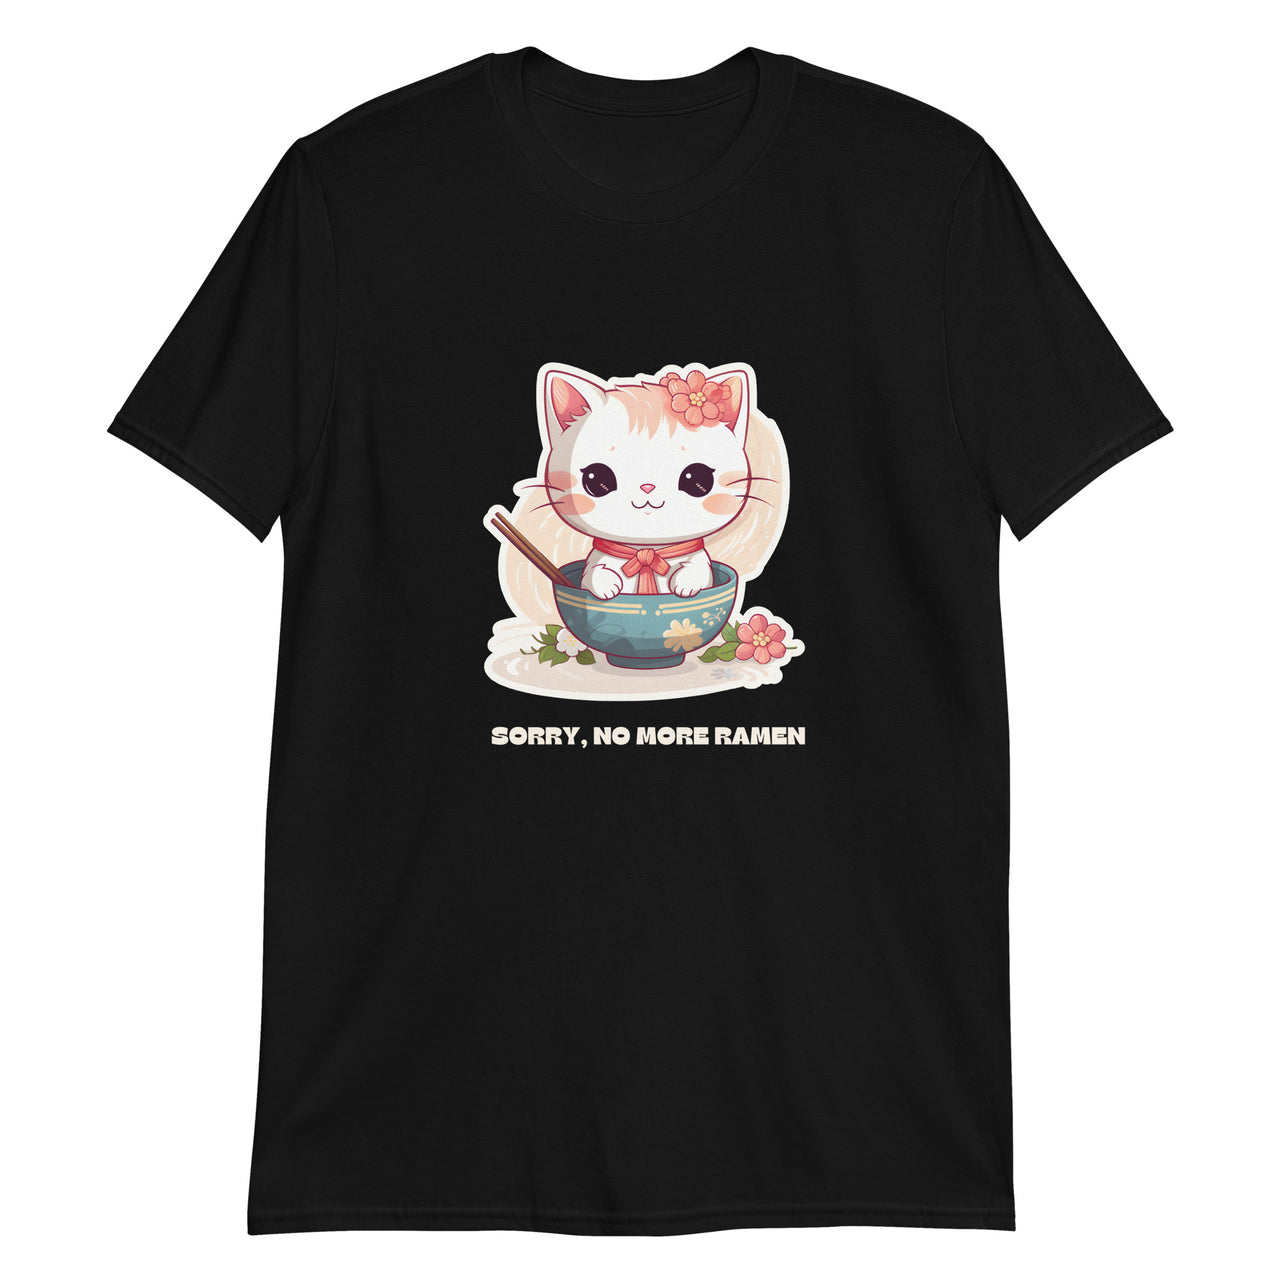 Sorry, No More Ramen: Anime Cat T-Shirt